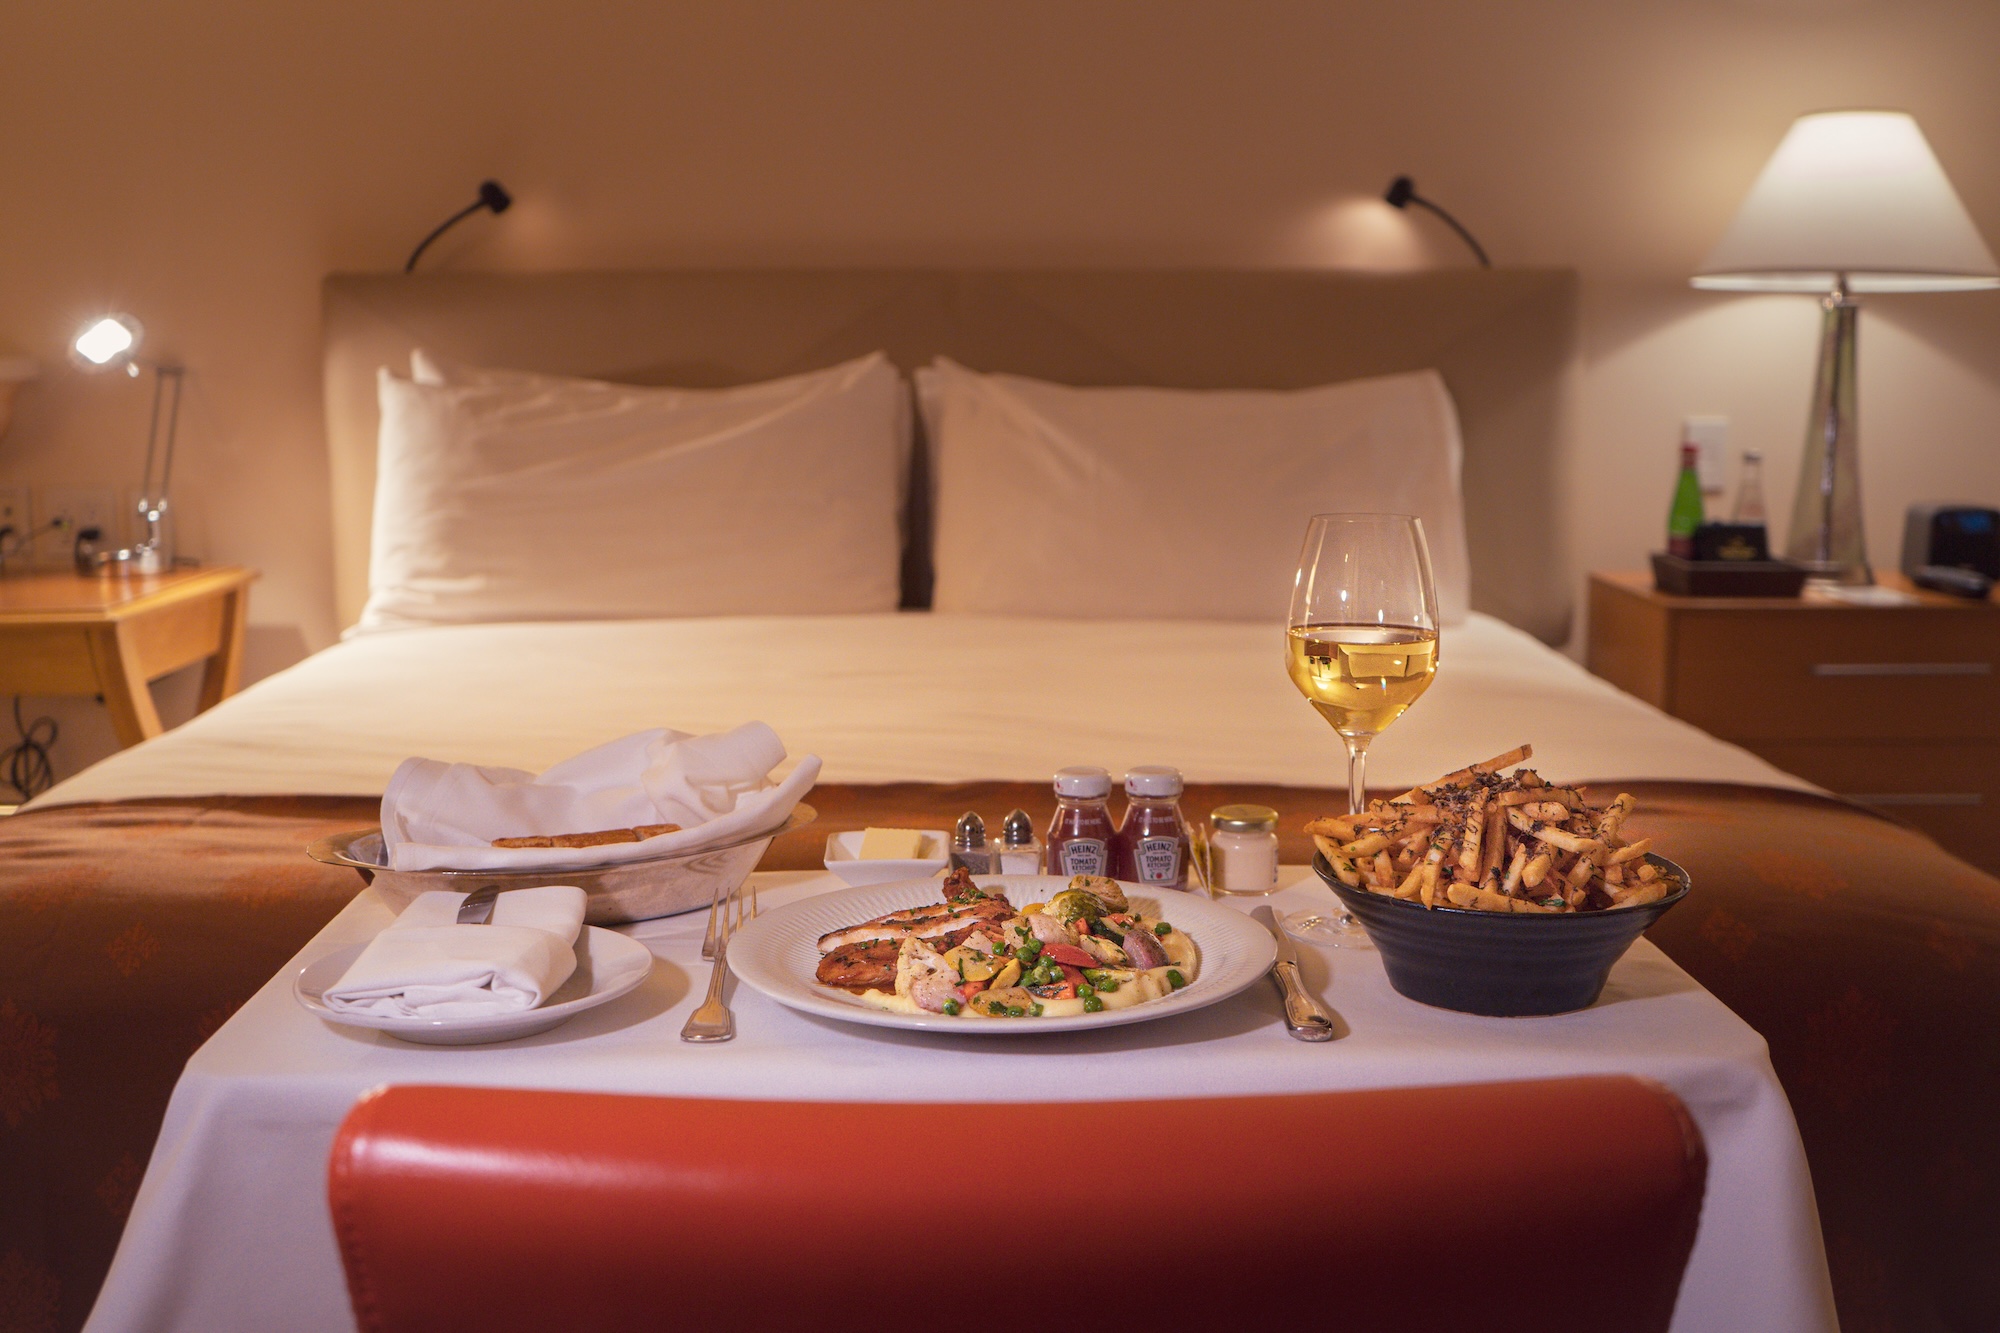 A Macao hospitality company has won global kudos for its room service app